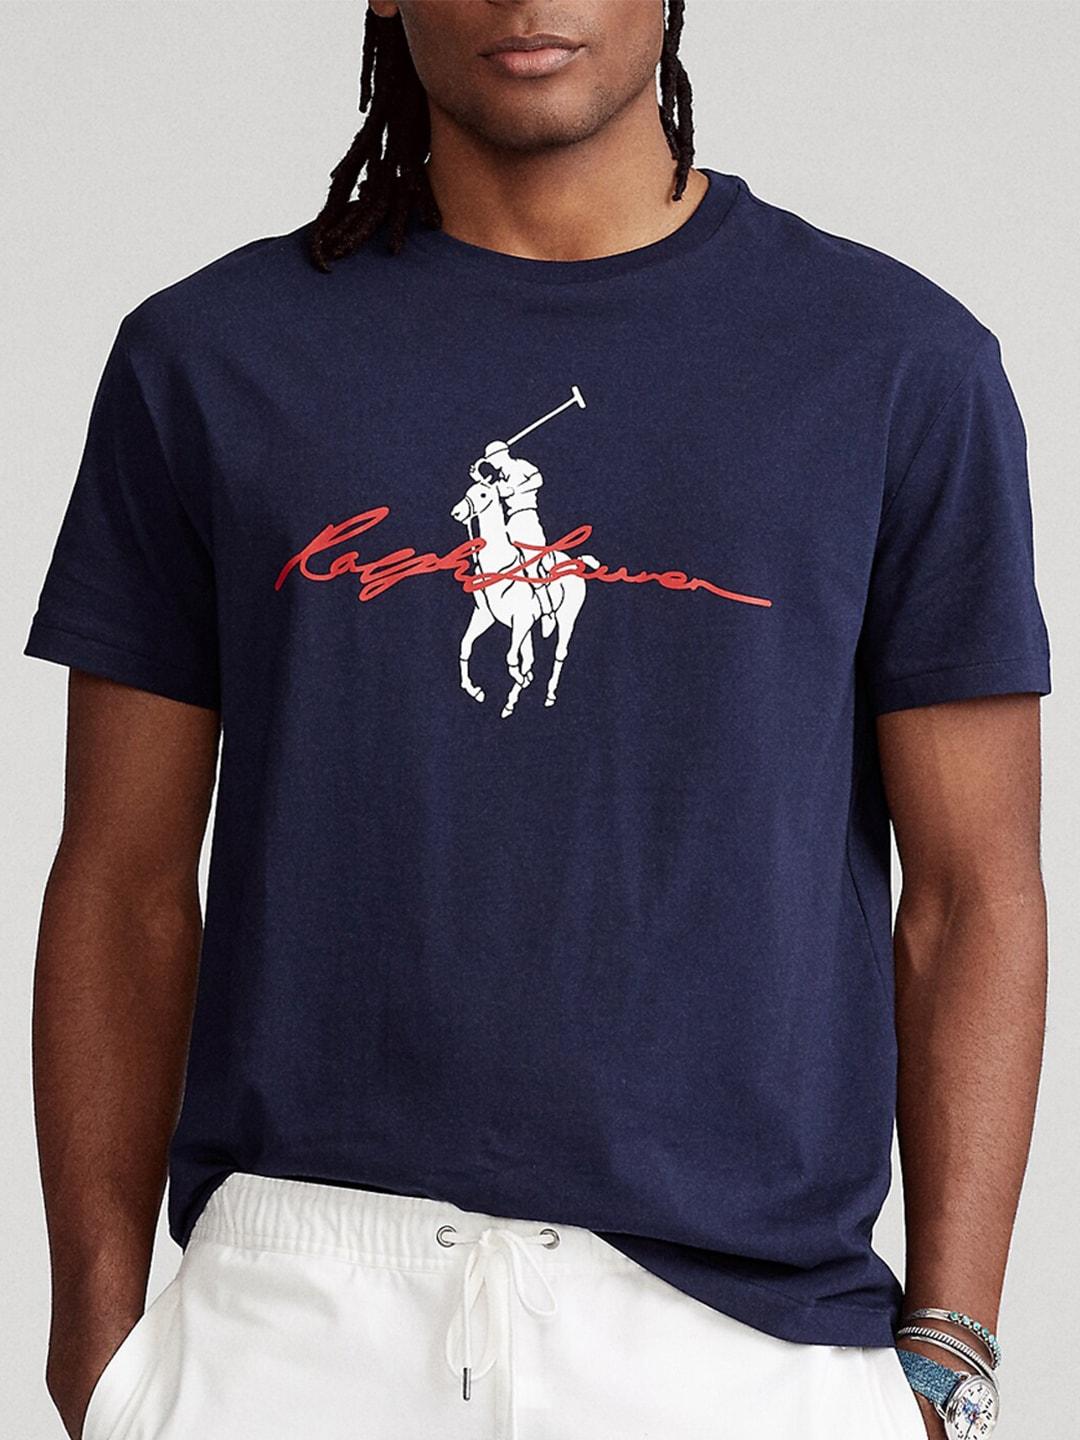 polo ralph lauren classic fit big pony logo jersey pure cotton t-shirts